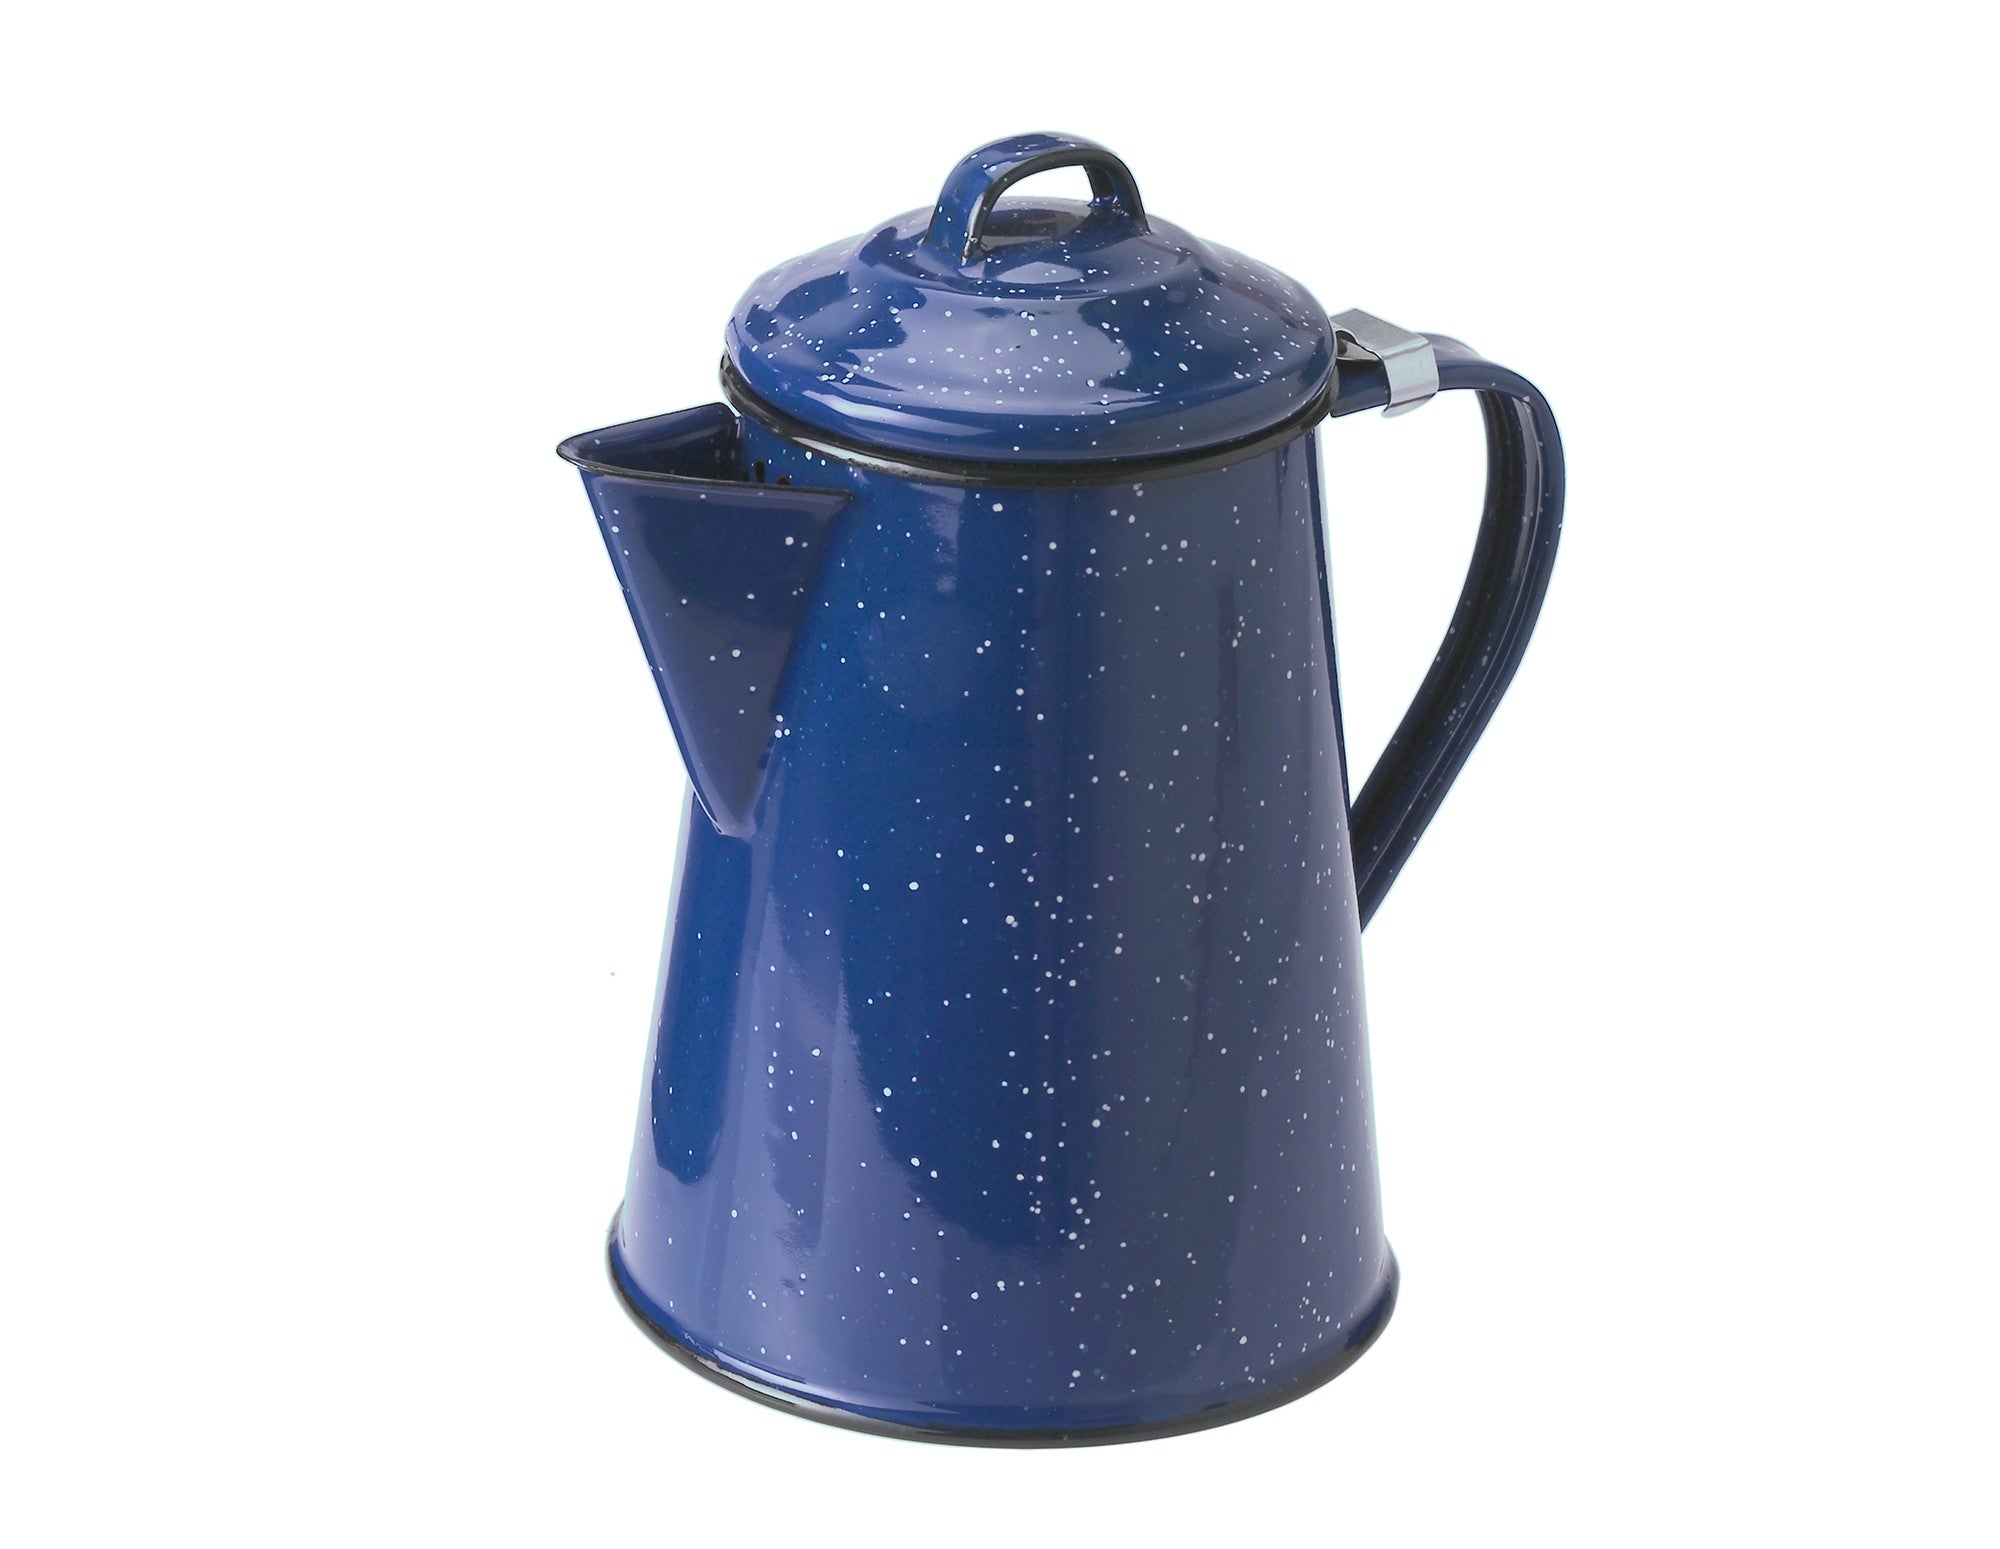 Coleman 12 Ounce Enamelware Coffee Mug (Blue)